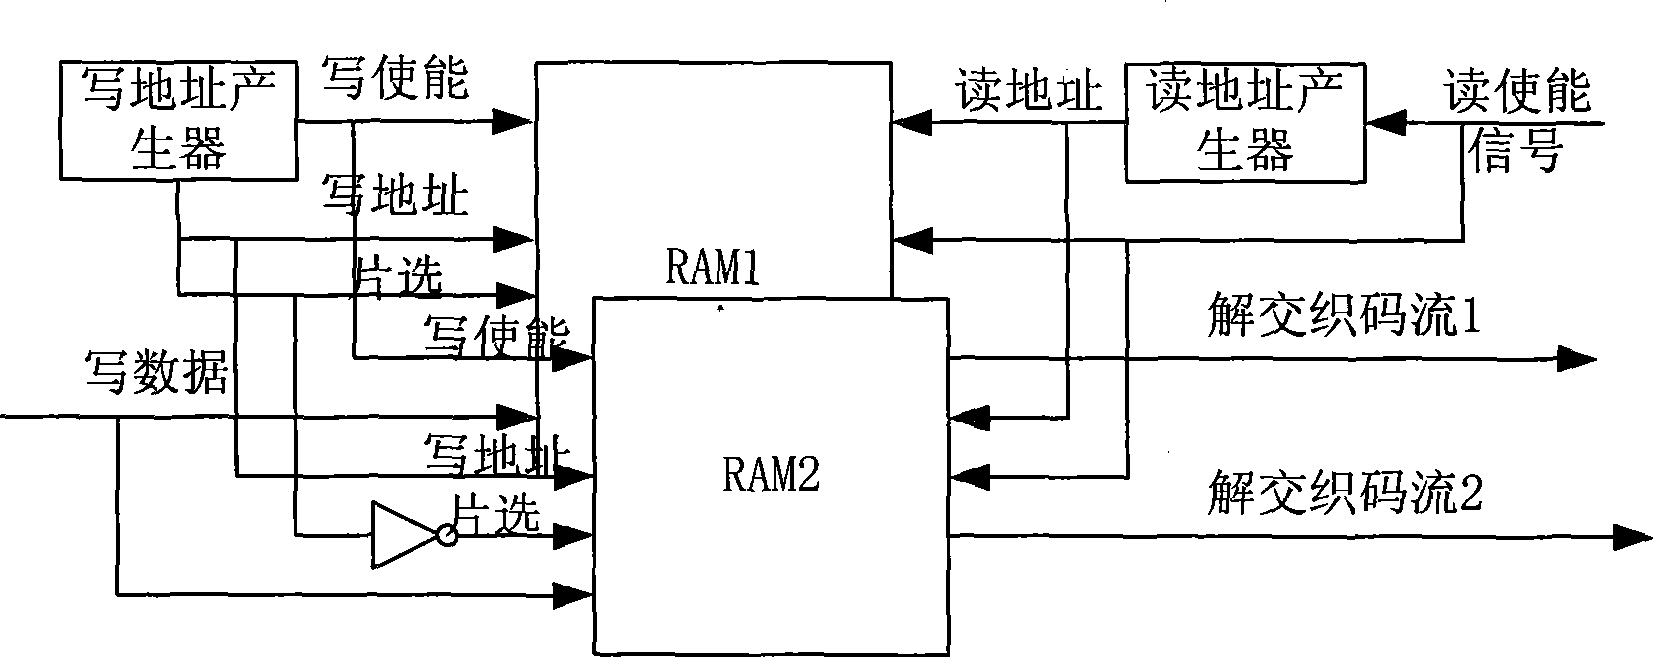 Parallel channel decoding apparatus applied in radio multimedia sensor network